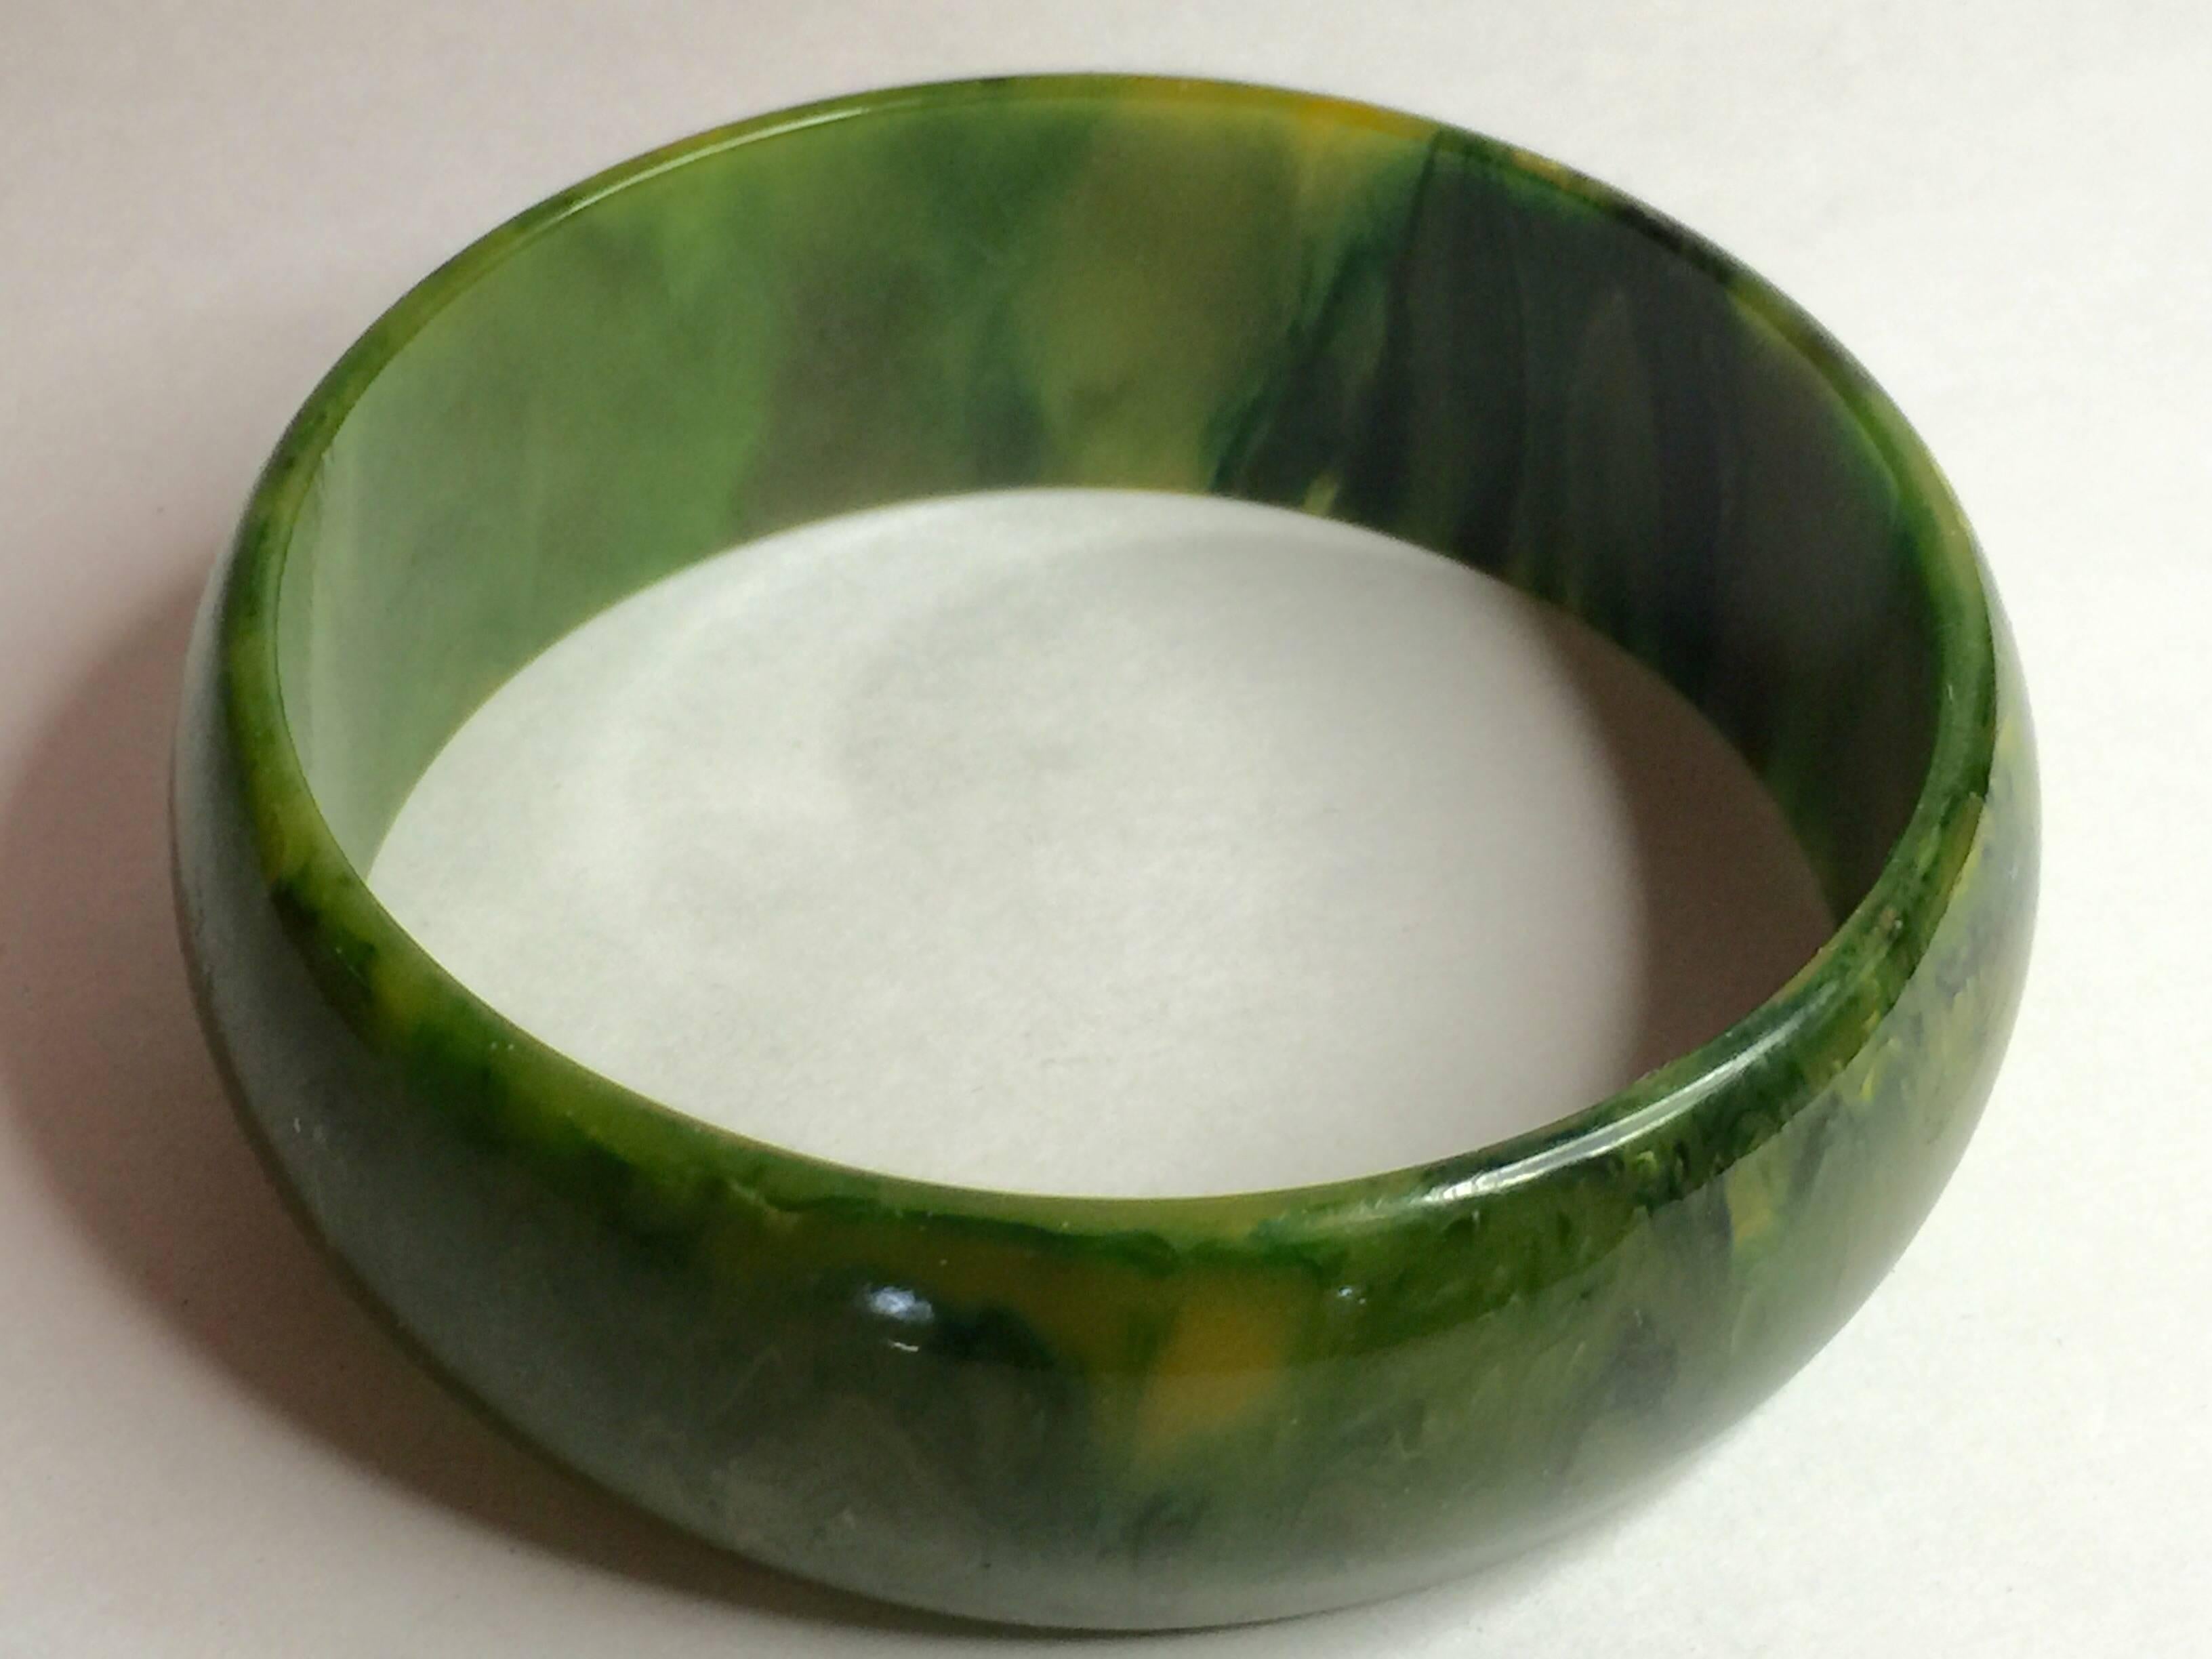 This 1930s Swirled Bakelite Green Faux Jade Bangle Bracelet is a simple elegant wrist accessory. Standard inner diameter of approximately 2.5